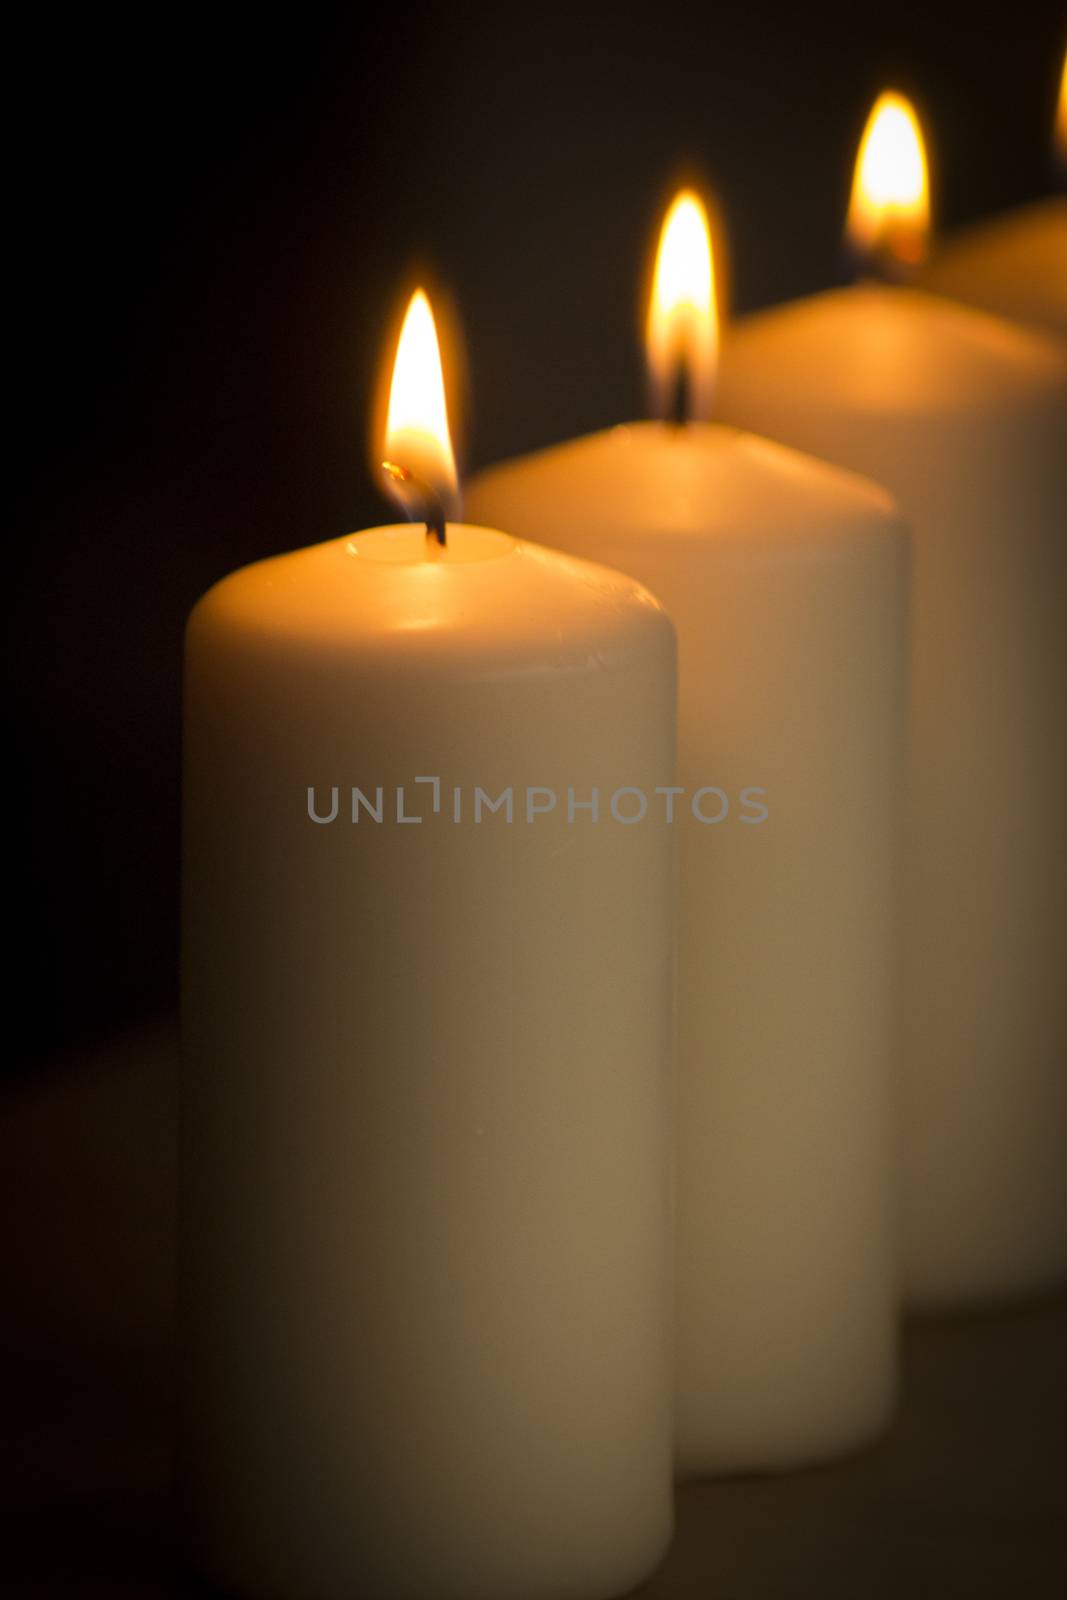 Candles lights burning close-up plain background by edwardolive